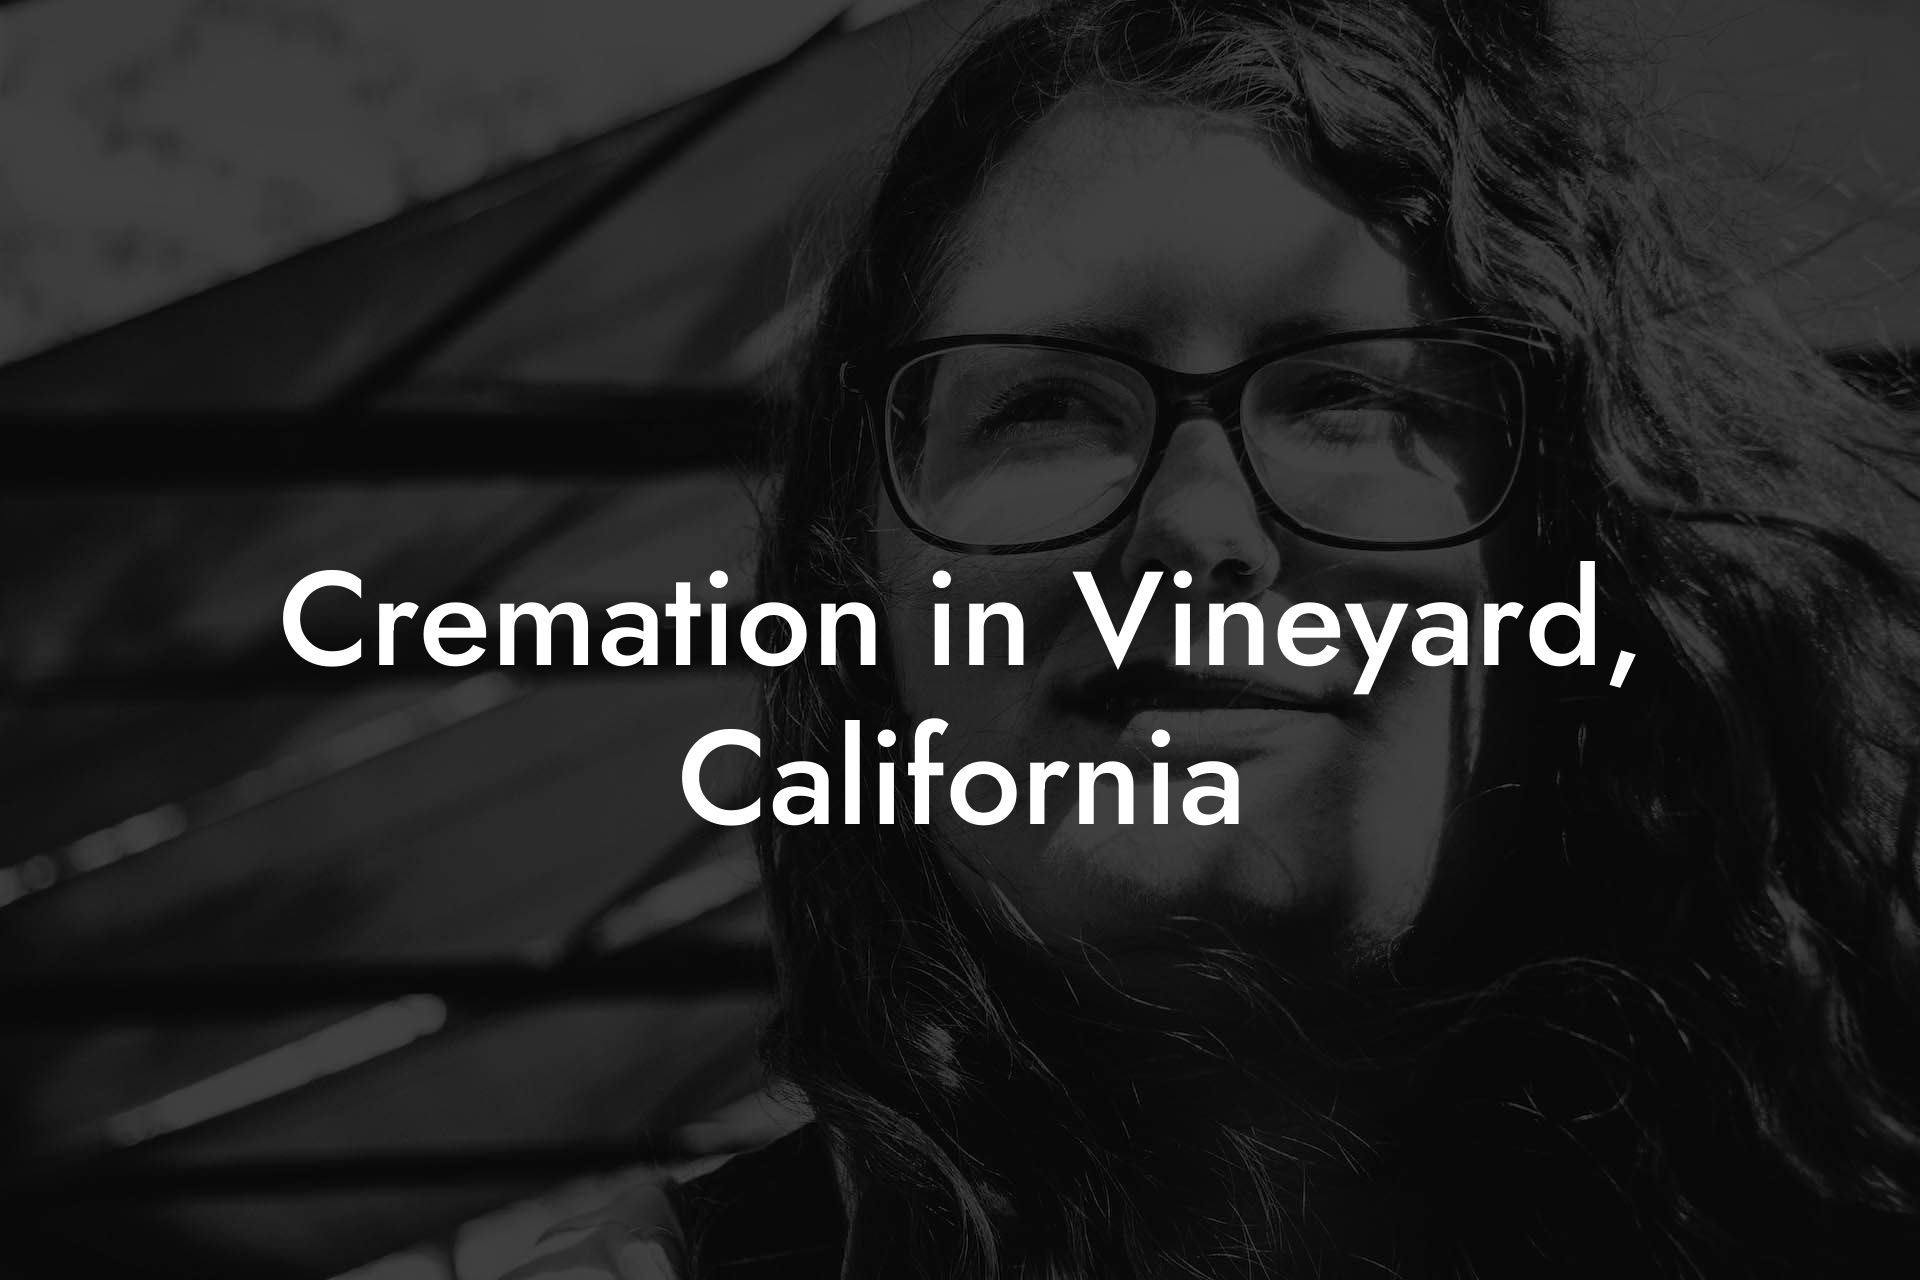 Cremation in Vineyard, California